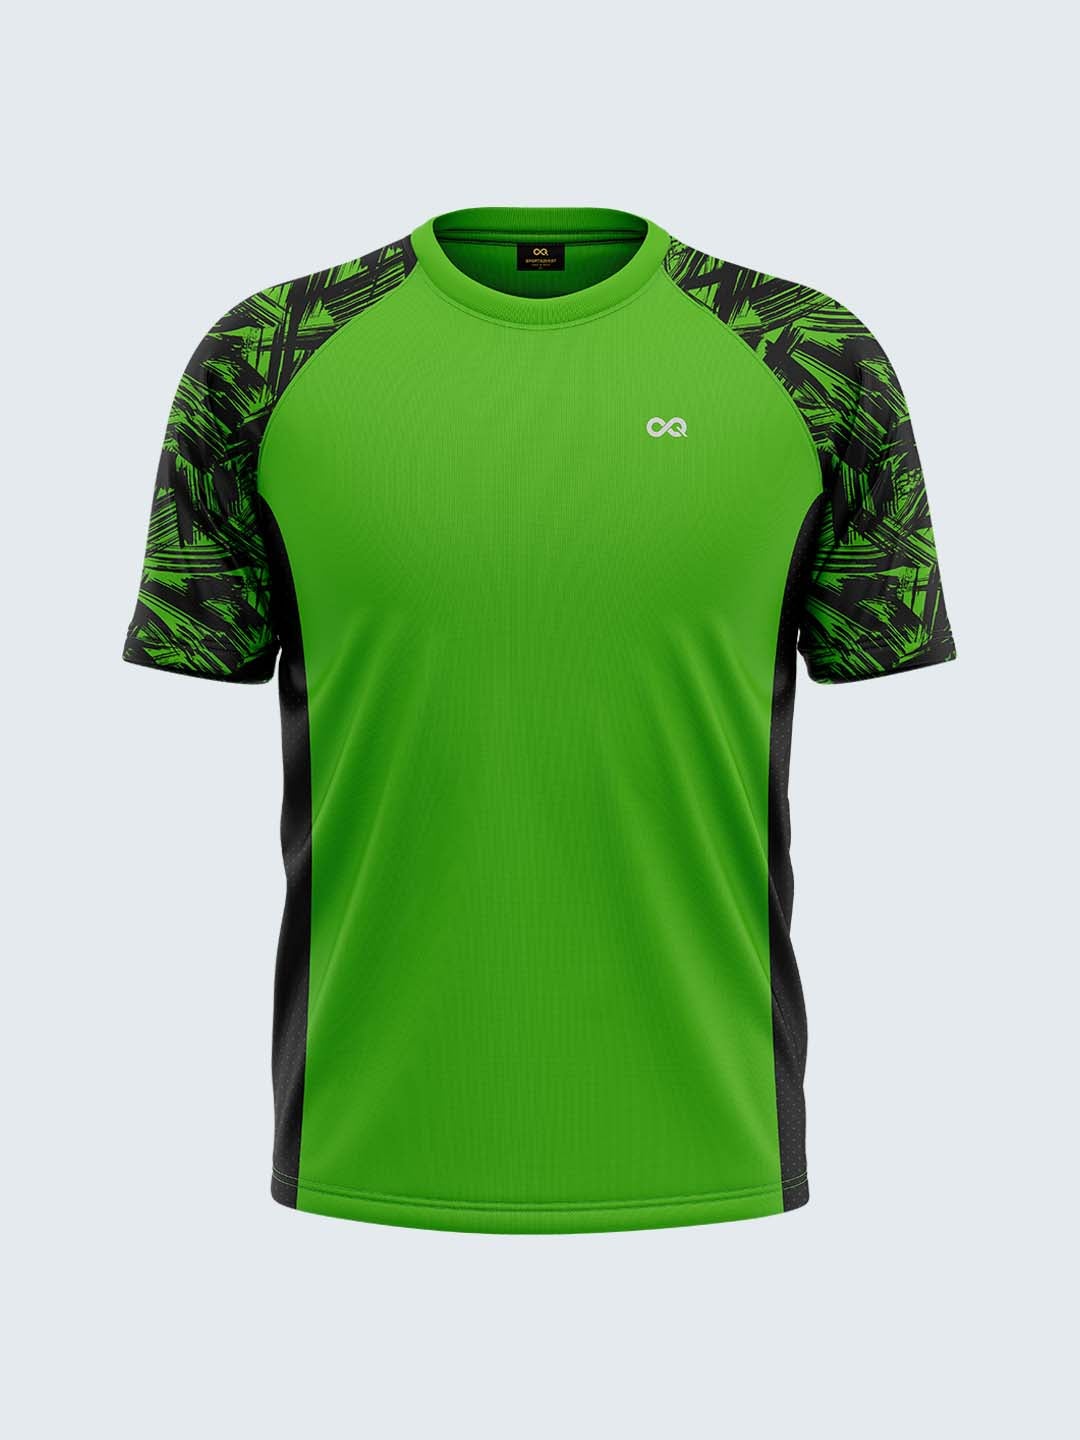 Men's Green Printed Round Neck Raglan Sports T-Shirt - 1982GN